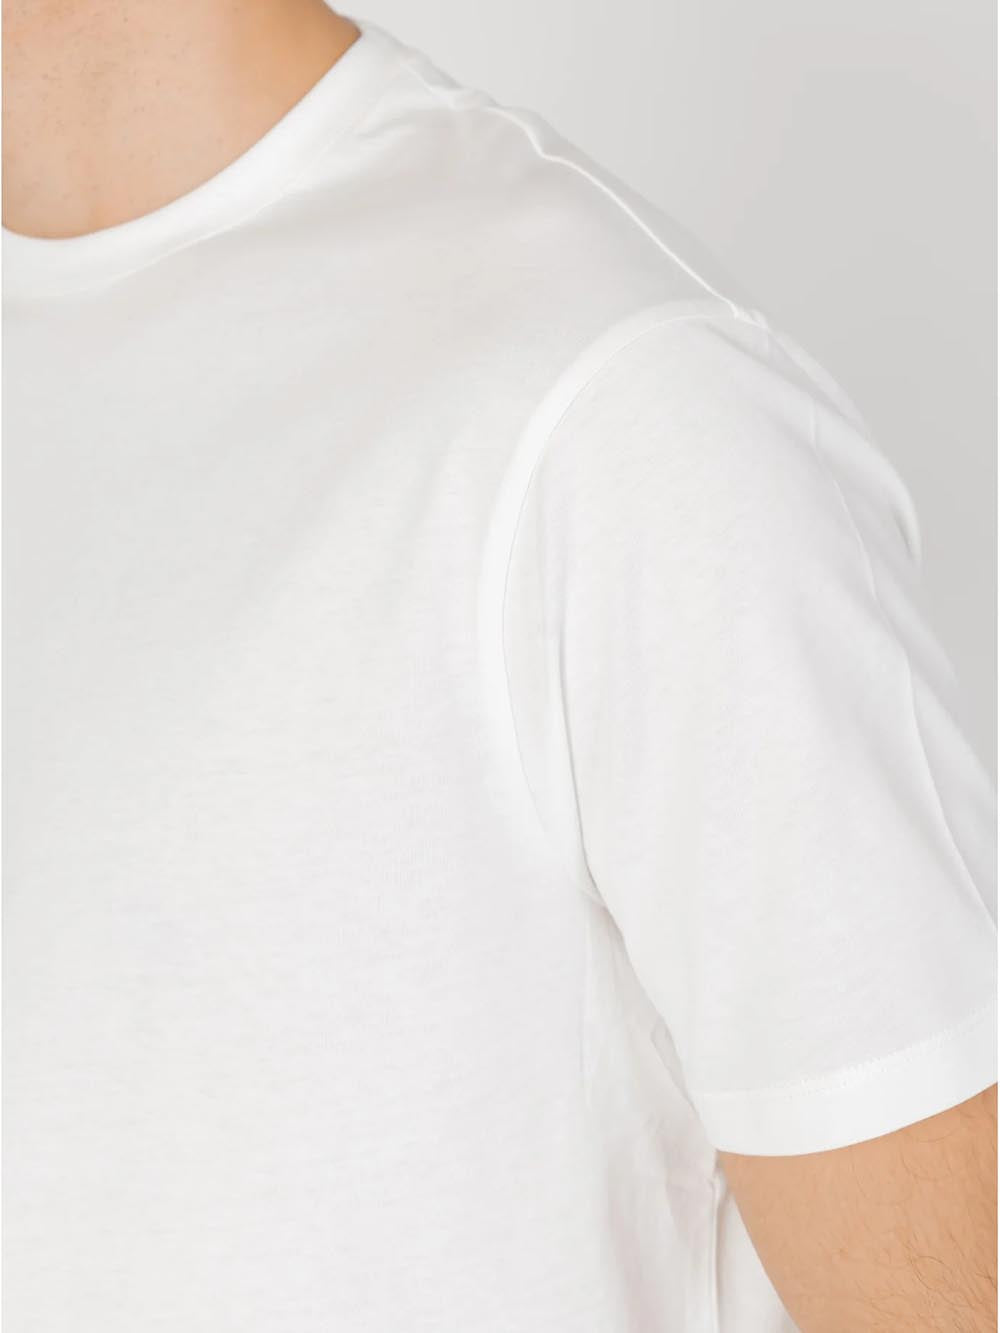 Armani Exchange T-shirt Uomo 3dztjj Zj8ez Bianco